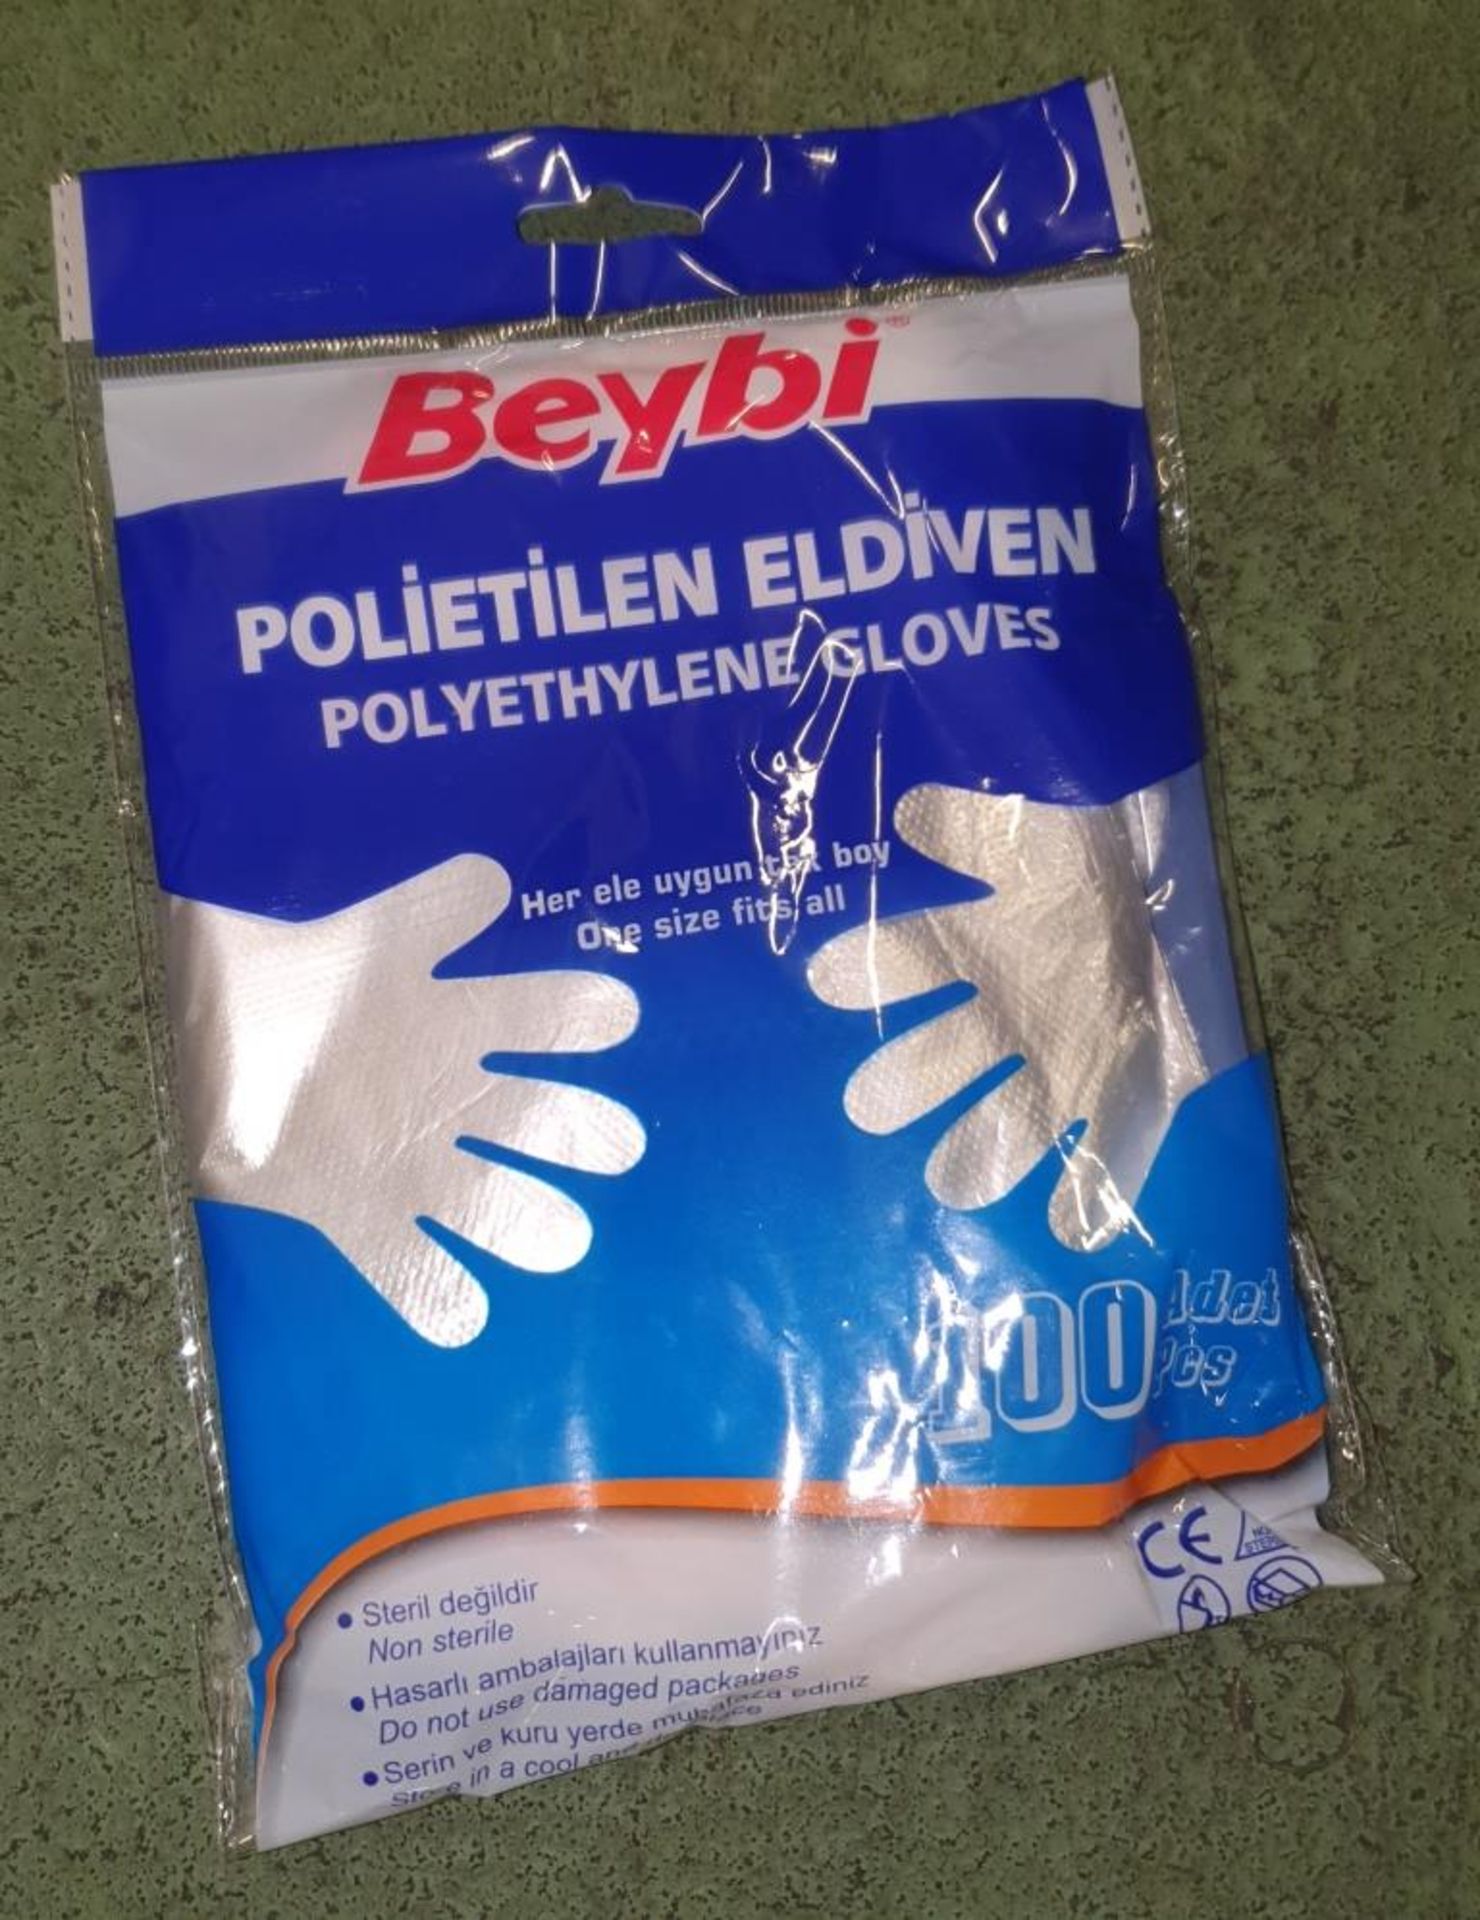 Beybi HDPE Gloves - Size L - 100 gloves per bag - 200 bags per box - 1 box - Image 3 of 4